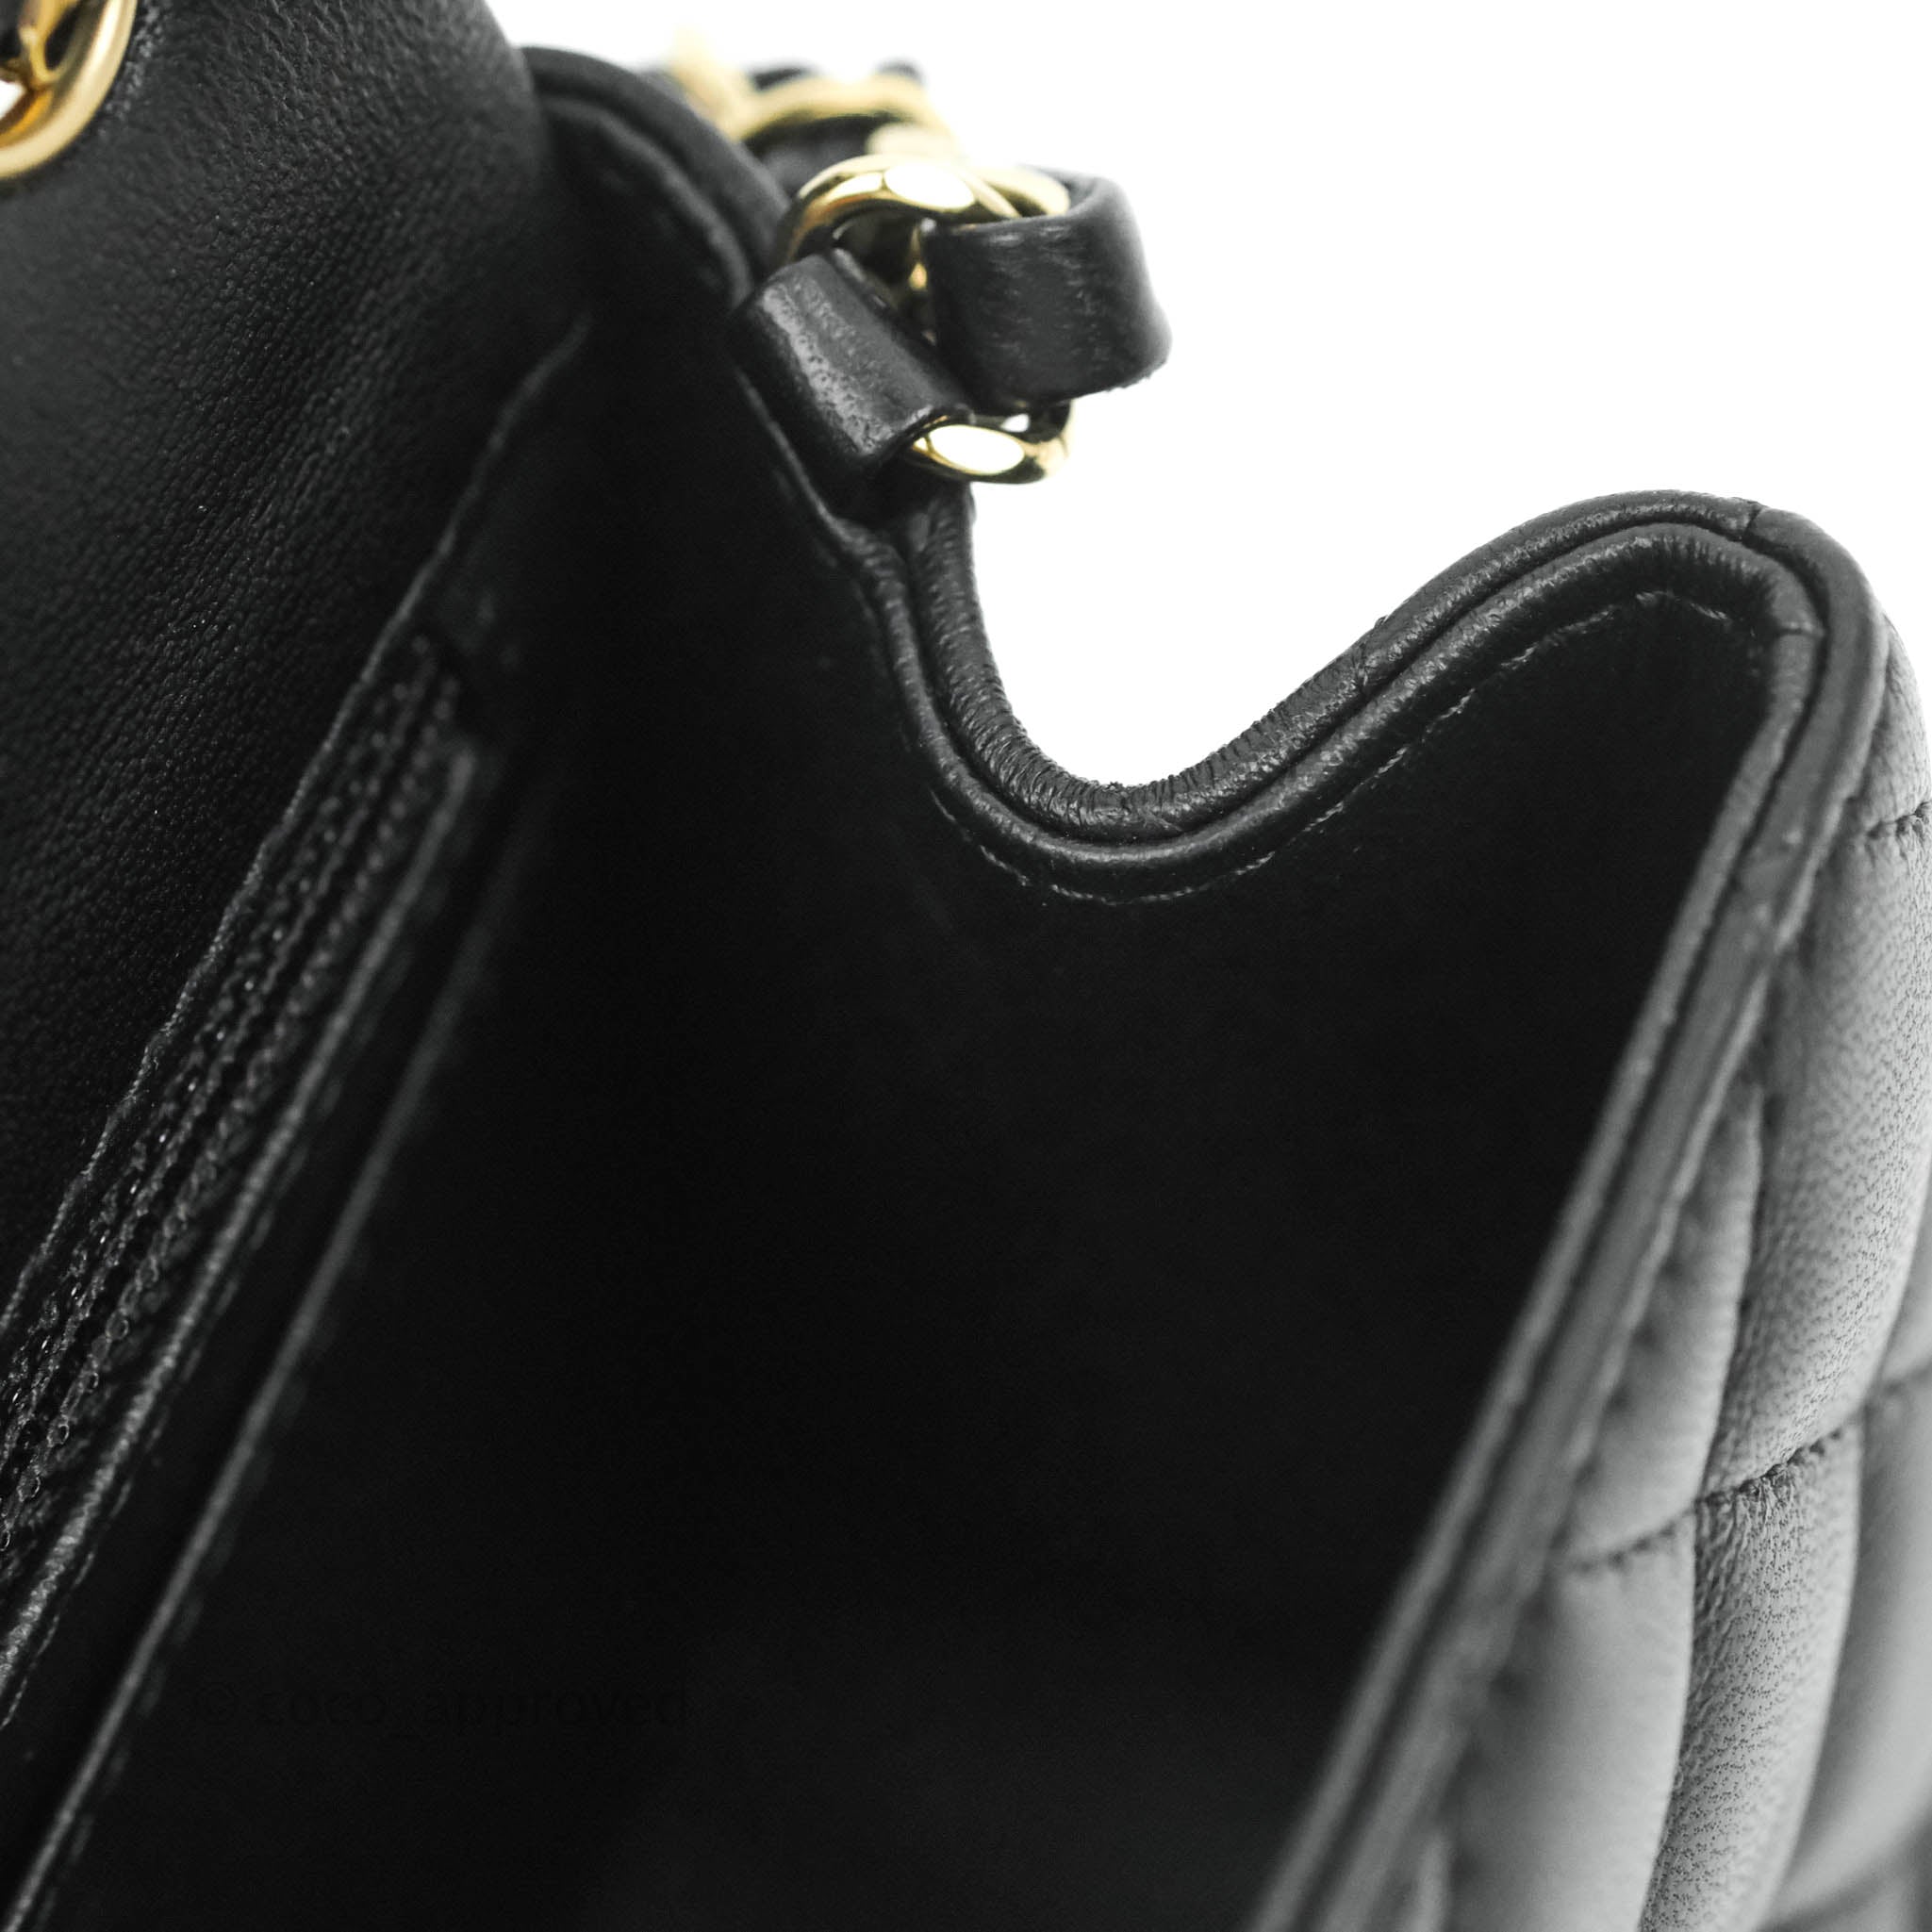 Chanel Caviar Square Mini Flap Bag – Now You Glow